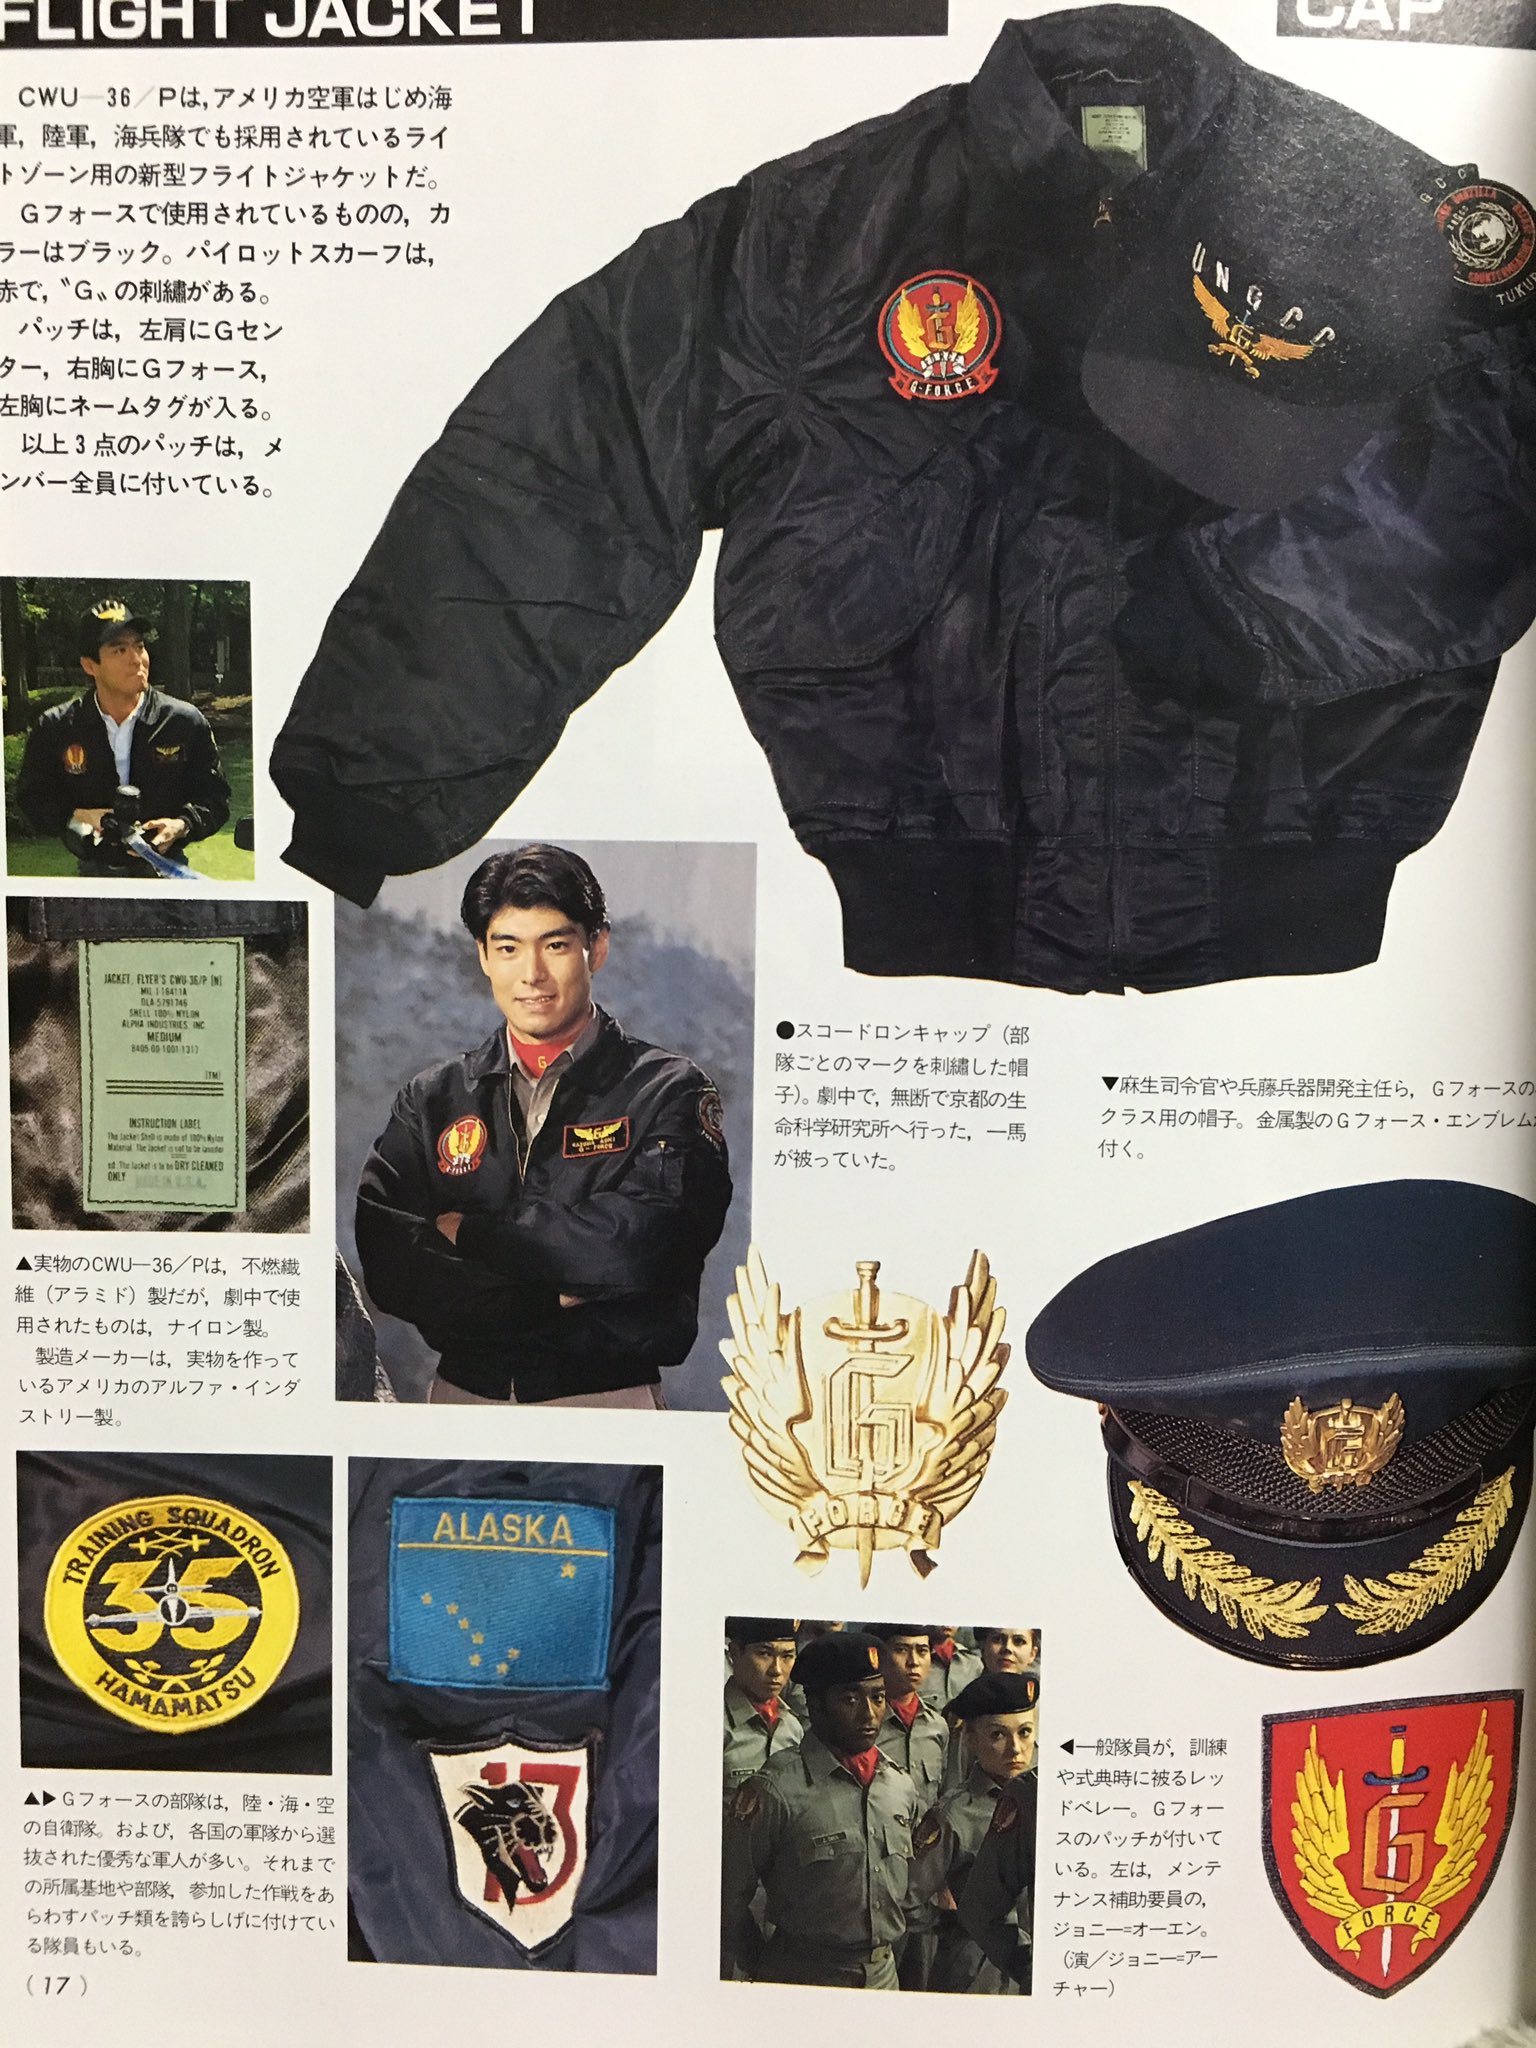 Yoshiyuki 別の雑誌では撮影前の小綺麗なフライトスーツとフライトジャケット メカゴジラのヘルメット コクピットのコンソールなど